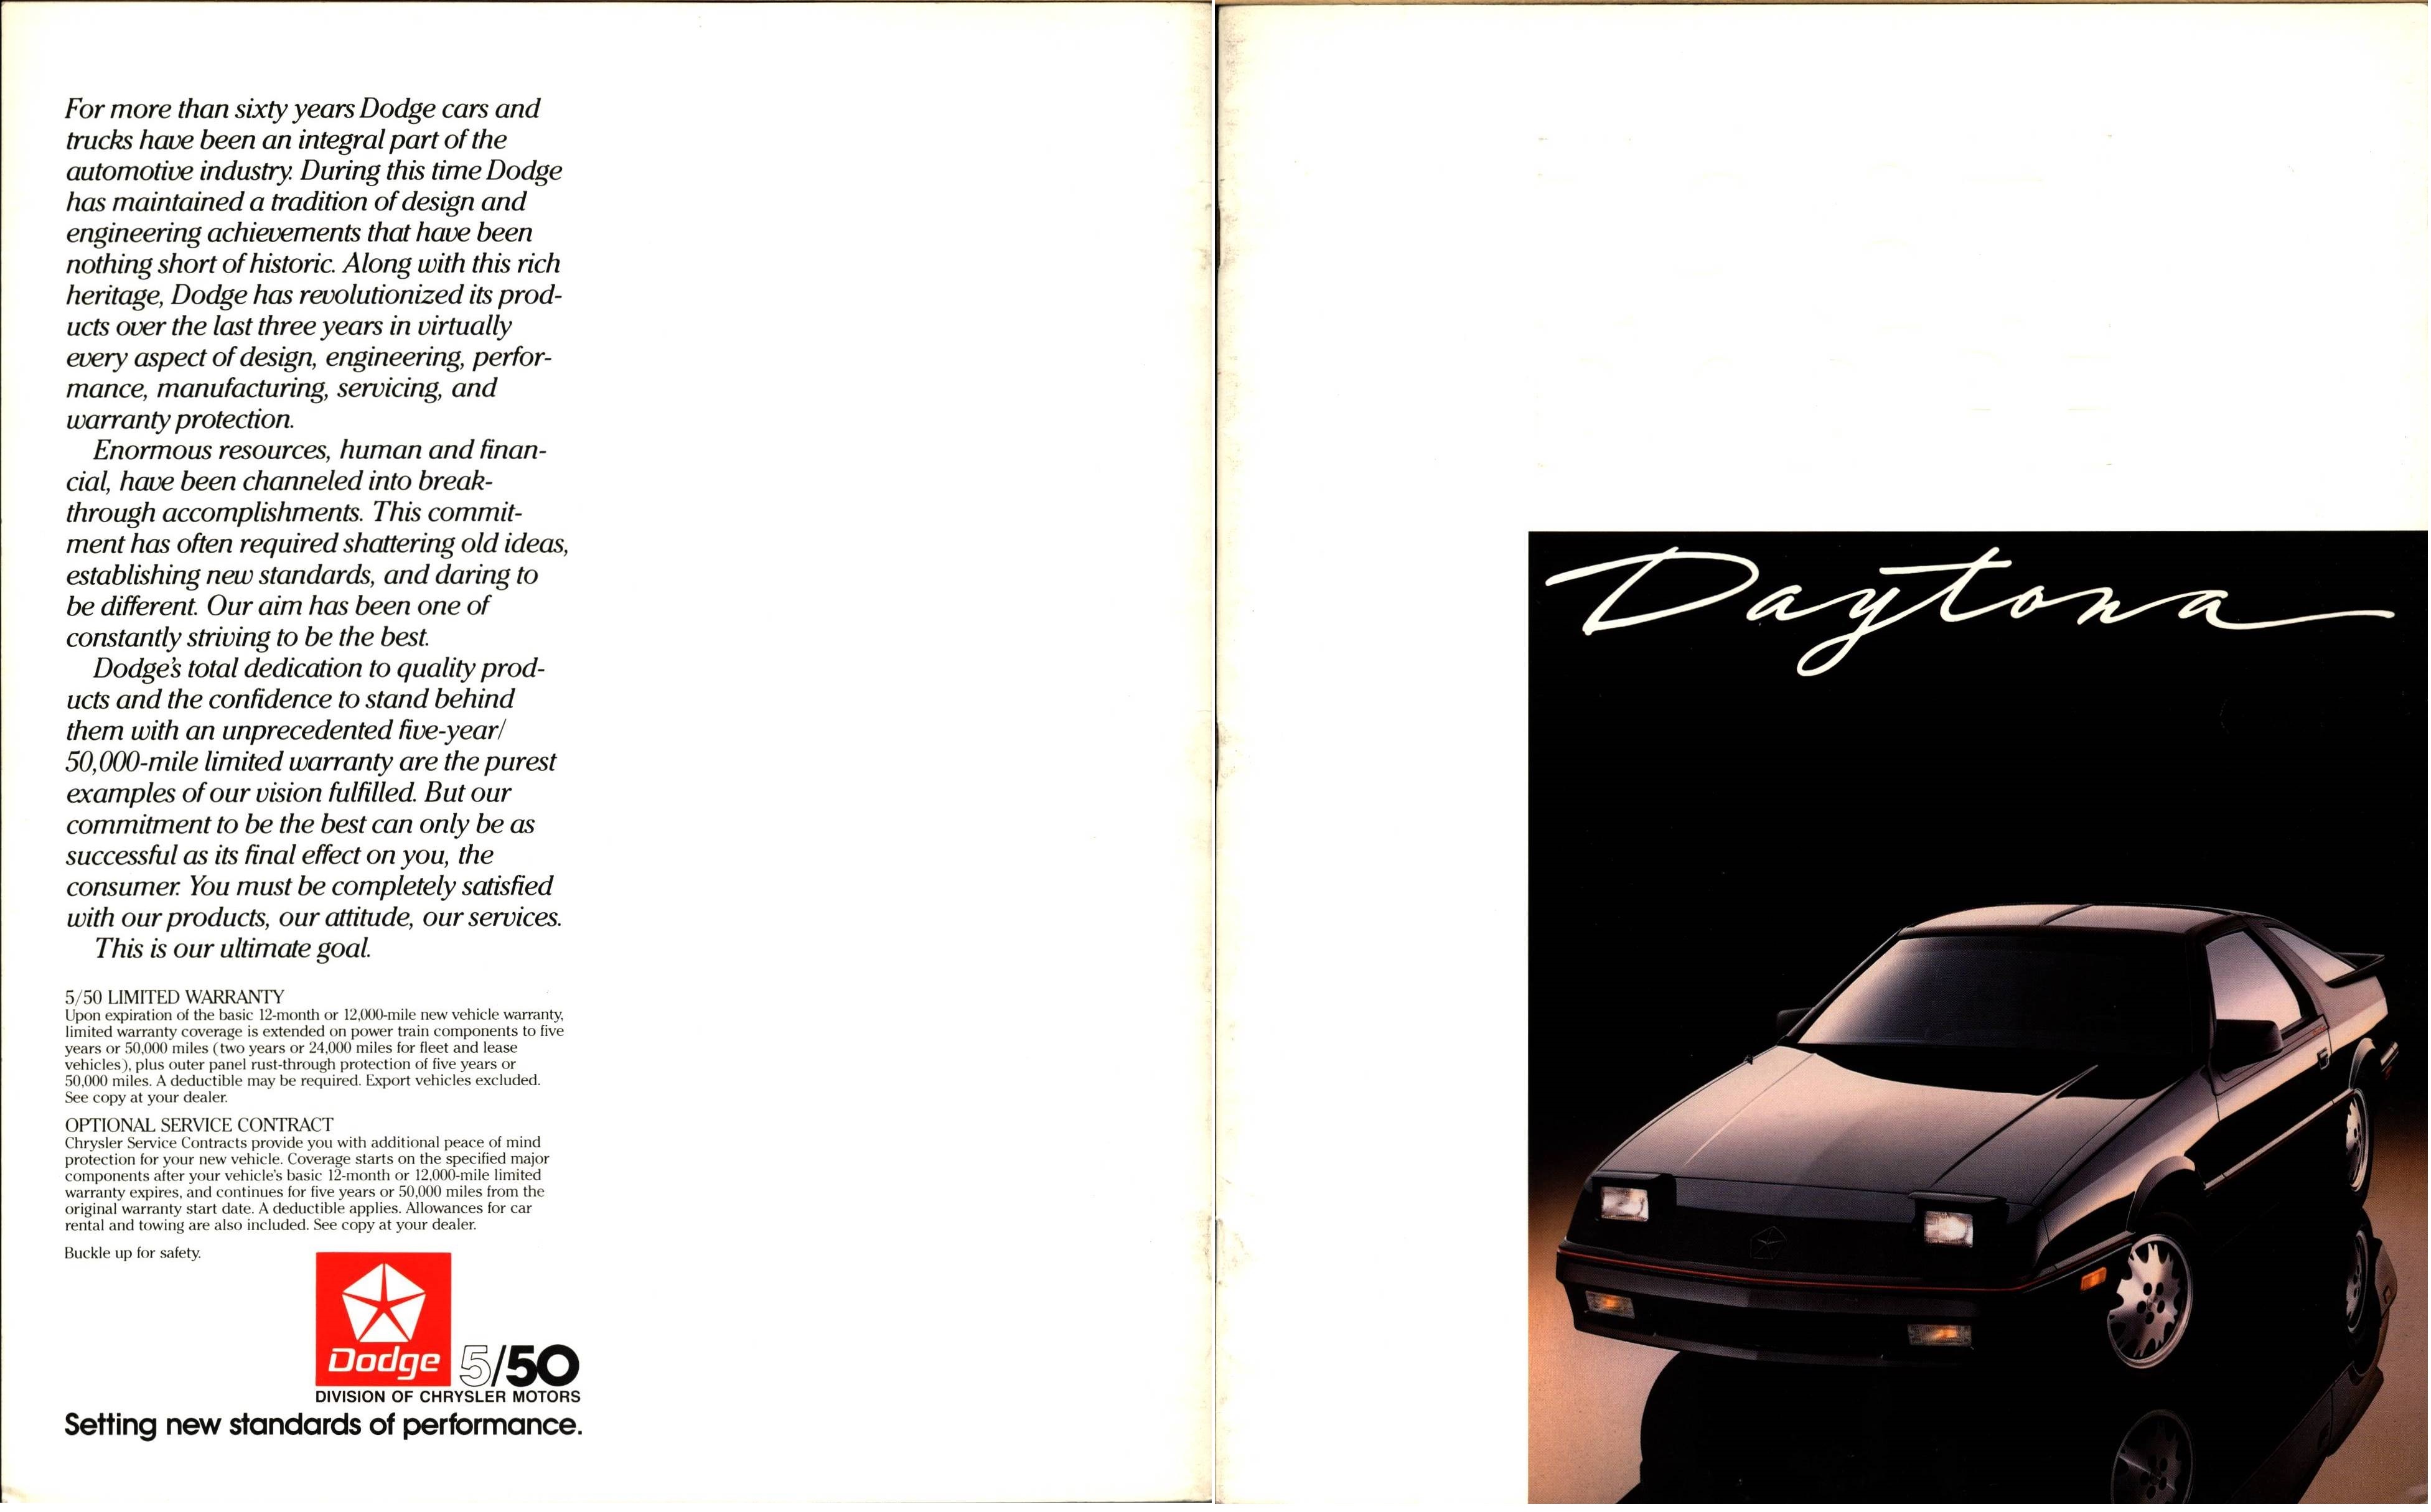 1987 Dodge Daytona Brochure 16-01